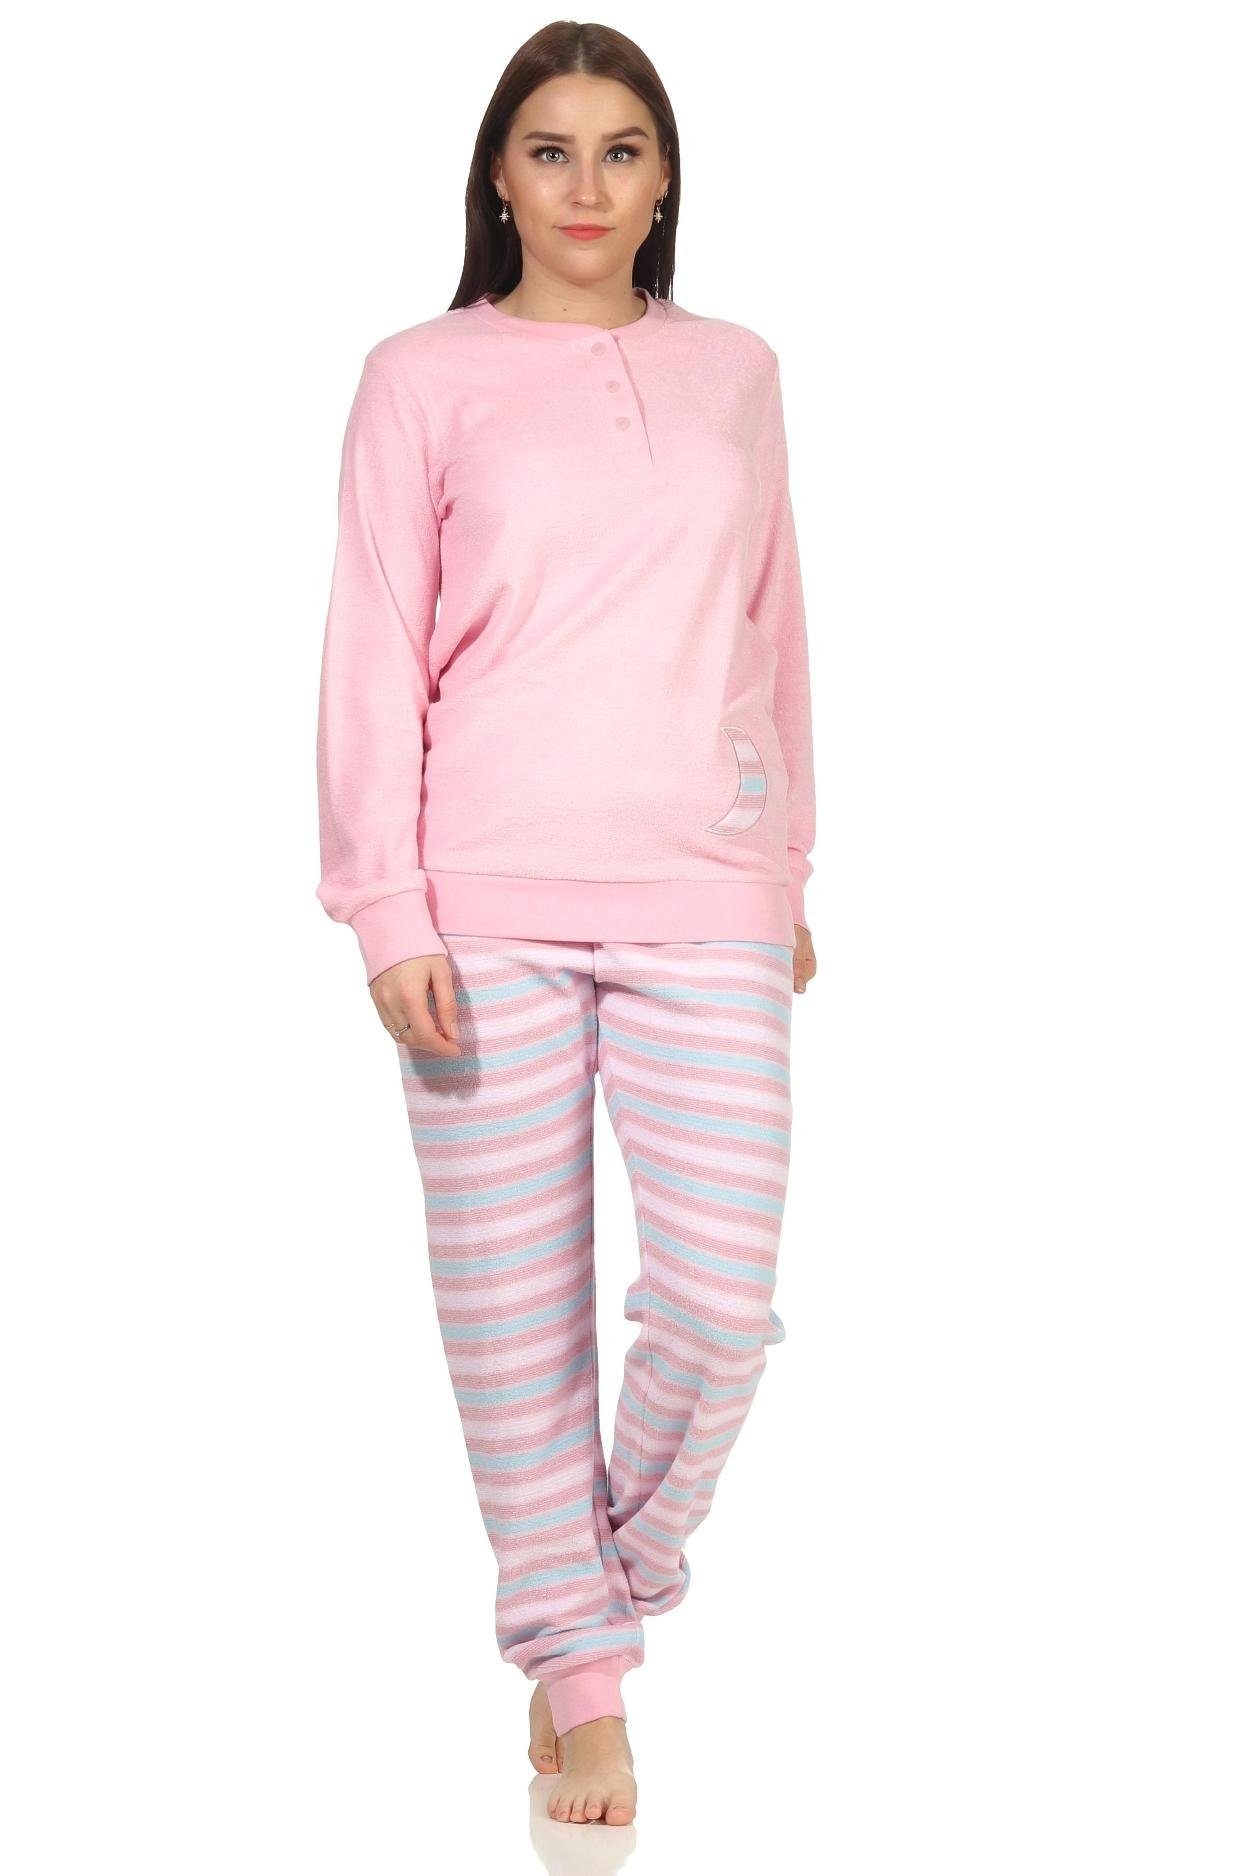 Bündchen by rosa Normann Creative Damen Frottee mit FALSCH Pyjama gestreift Schlafanzug Hose